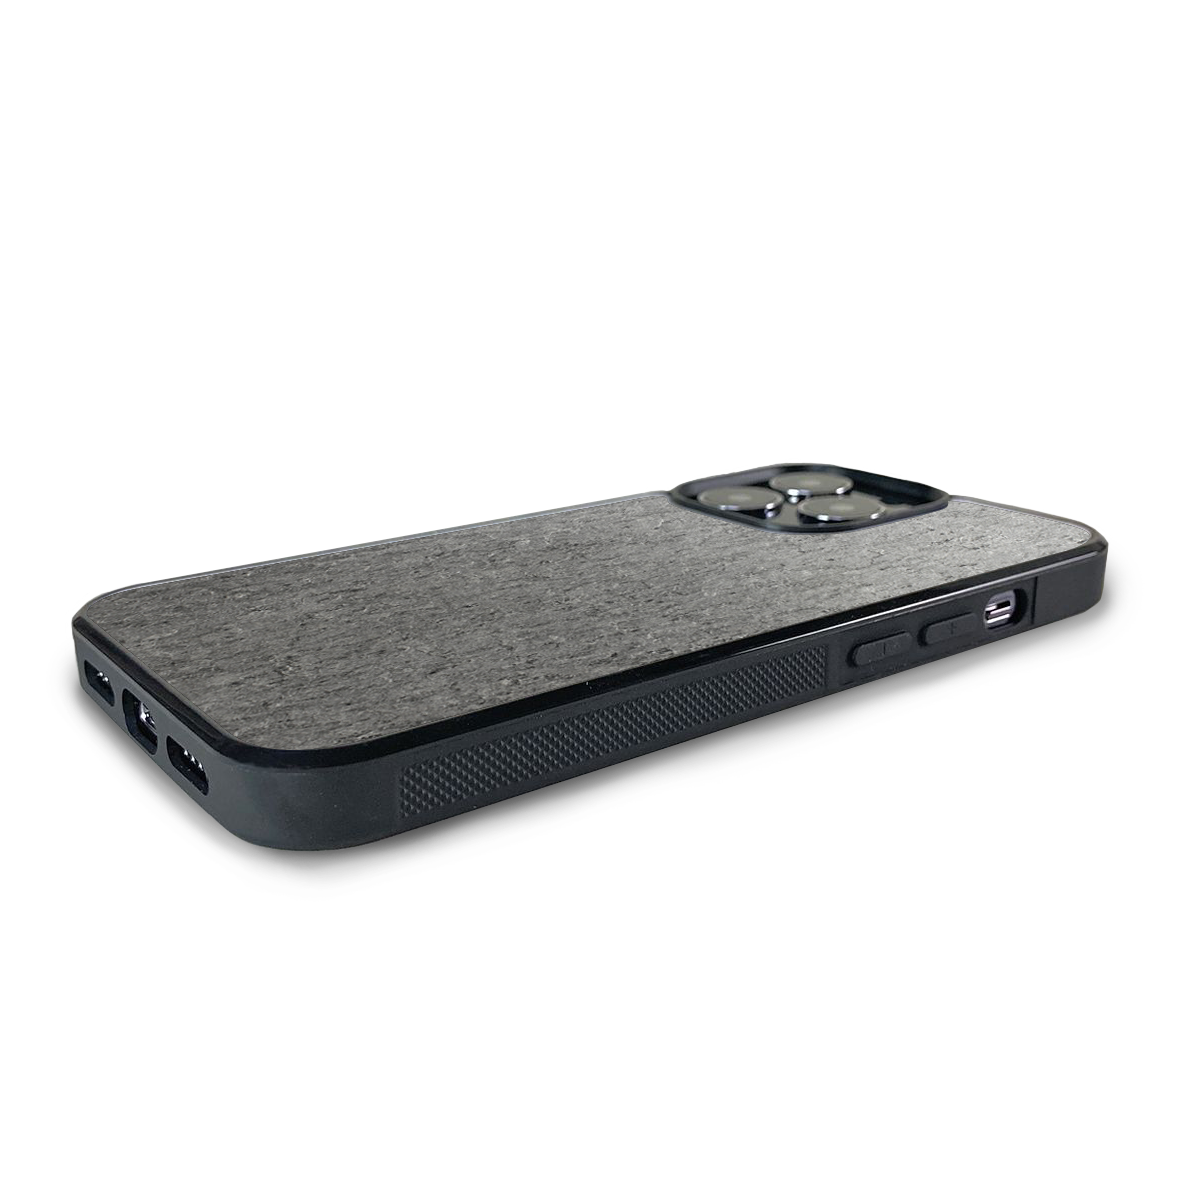 iPhone 14 Pro —  Stone Explorer Black Case